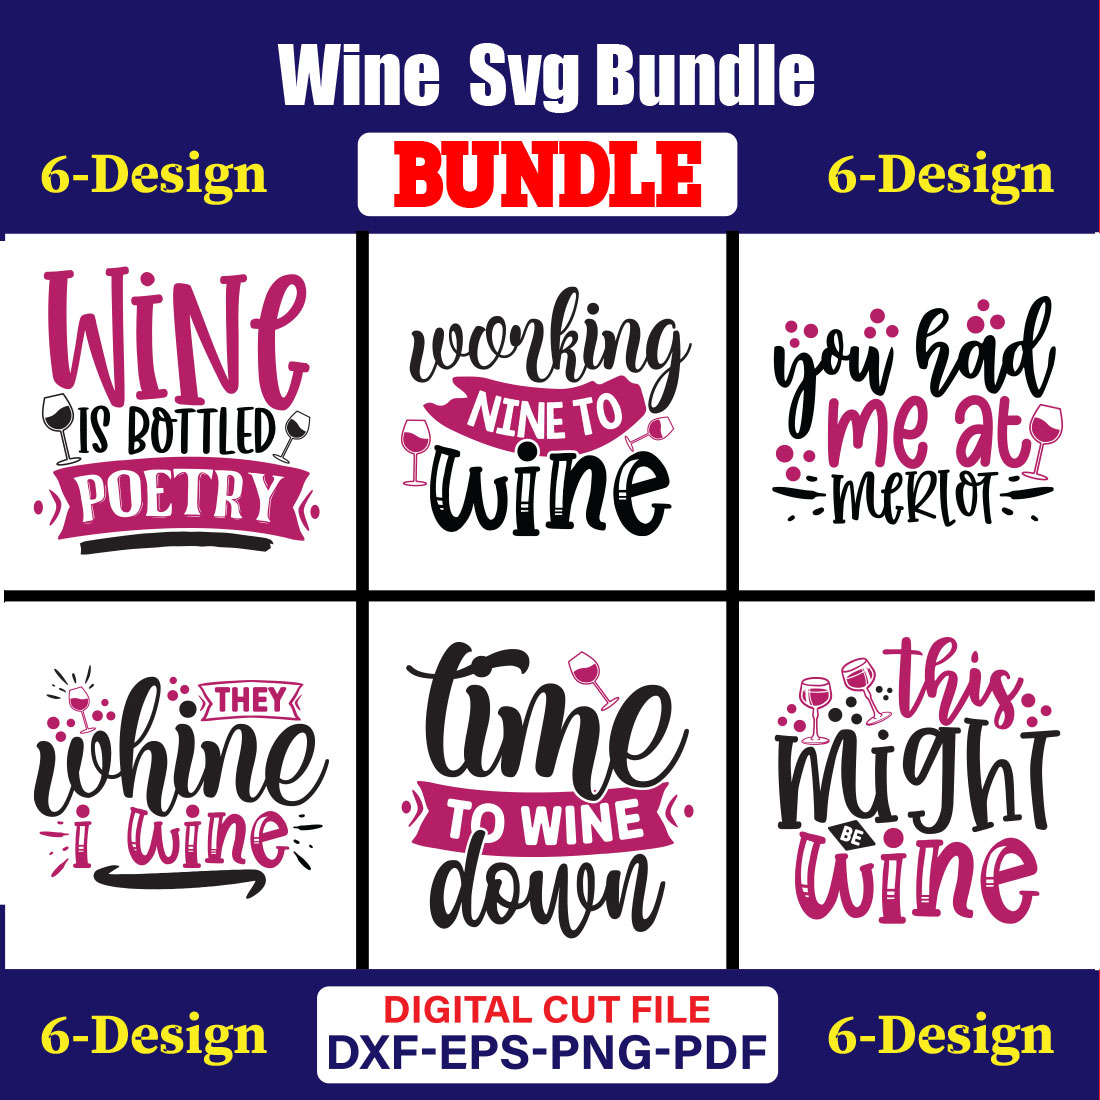 Wine T-shirt Design Bundle Vol-05 cover image.